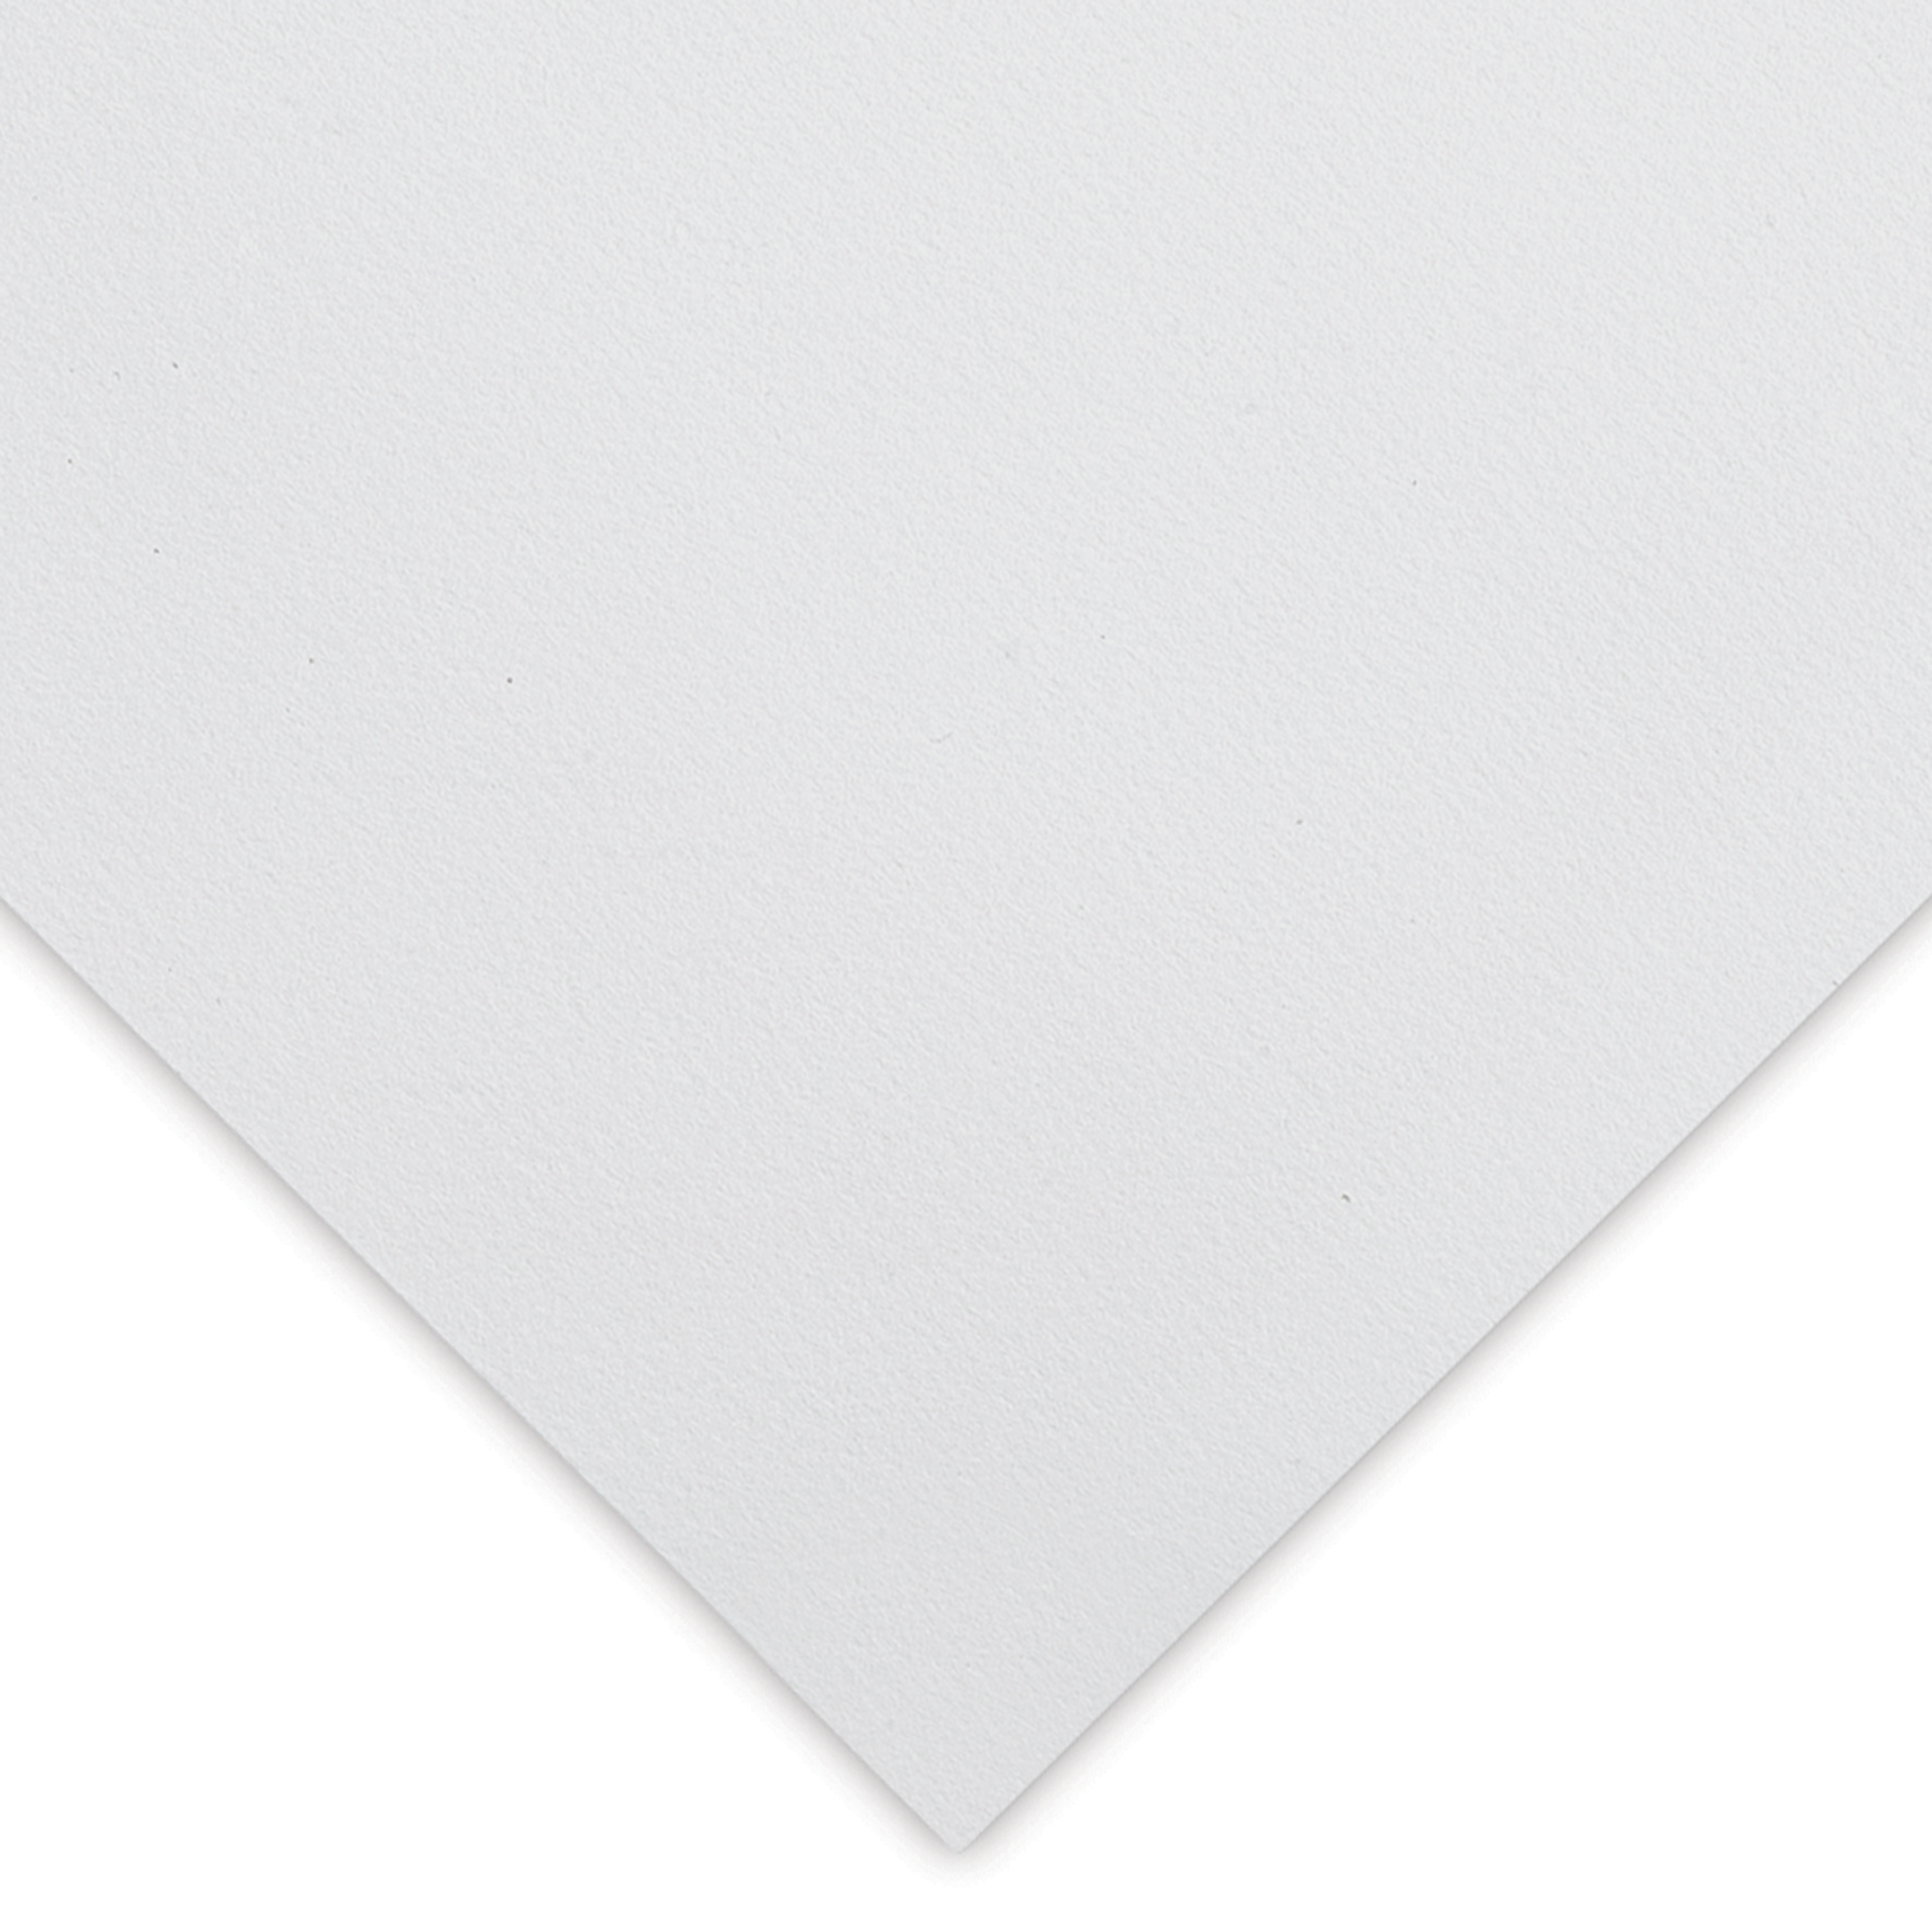 Stonehenge Paper Pad 5X7 15 Sheets/Pkg